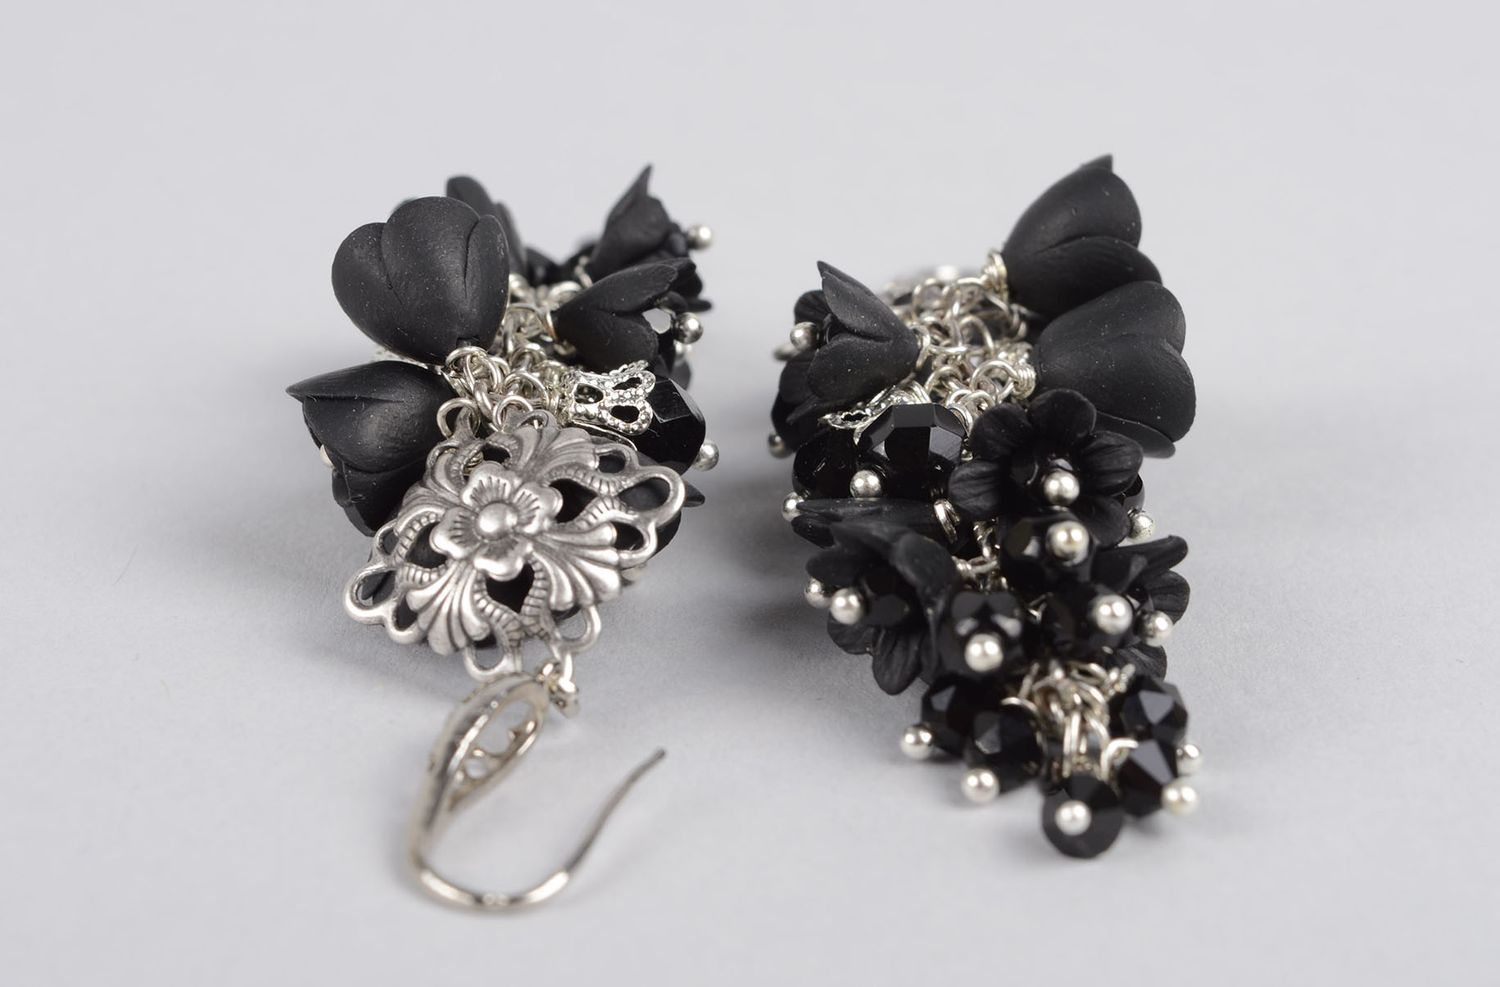 Handmade elegant black earrings stylish dangling earrings designer accessories photo 5